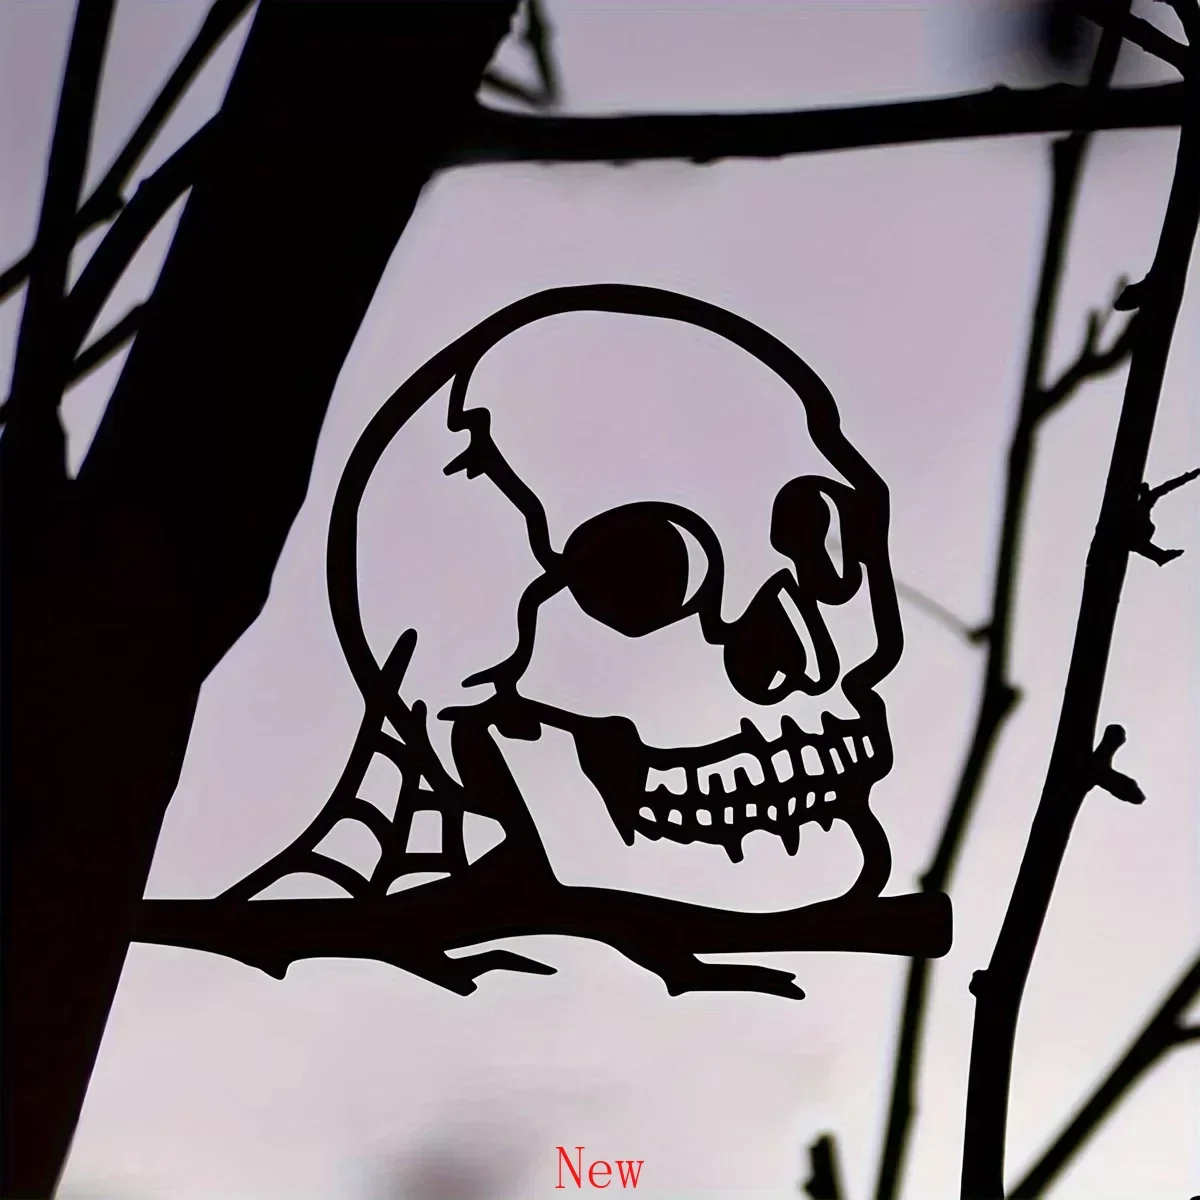 

Spooky Halloween Skeleton Skull Metal Silhouette Steel Sign Cutout Outdoor Home Decor Garden Halloween Party Decor Decorations